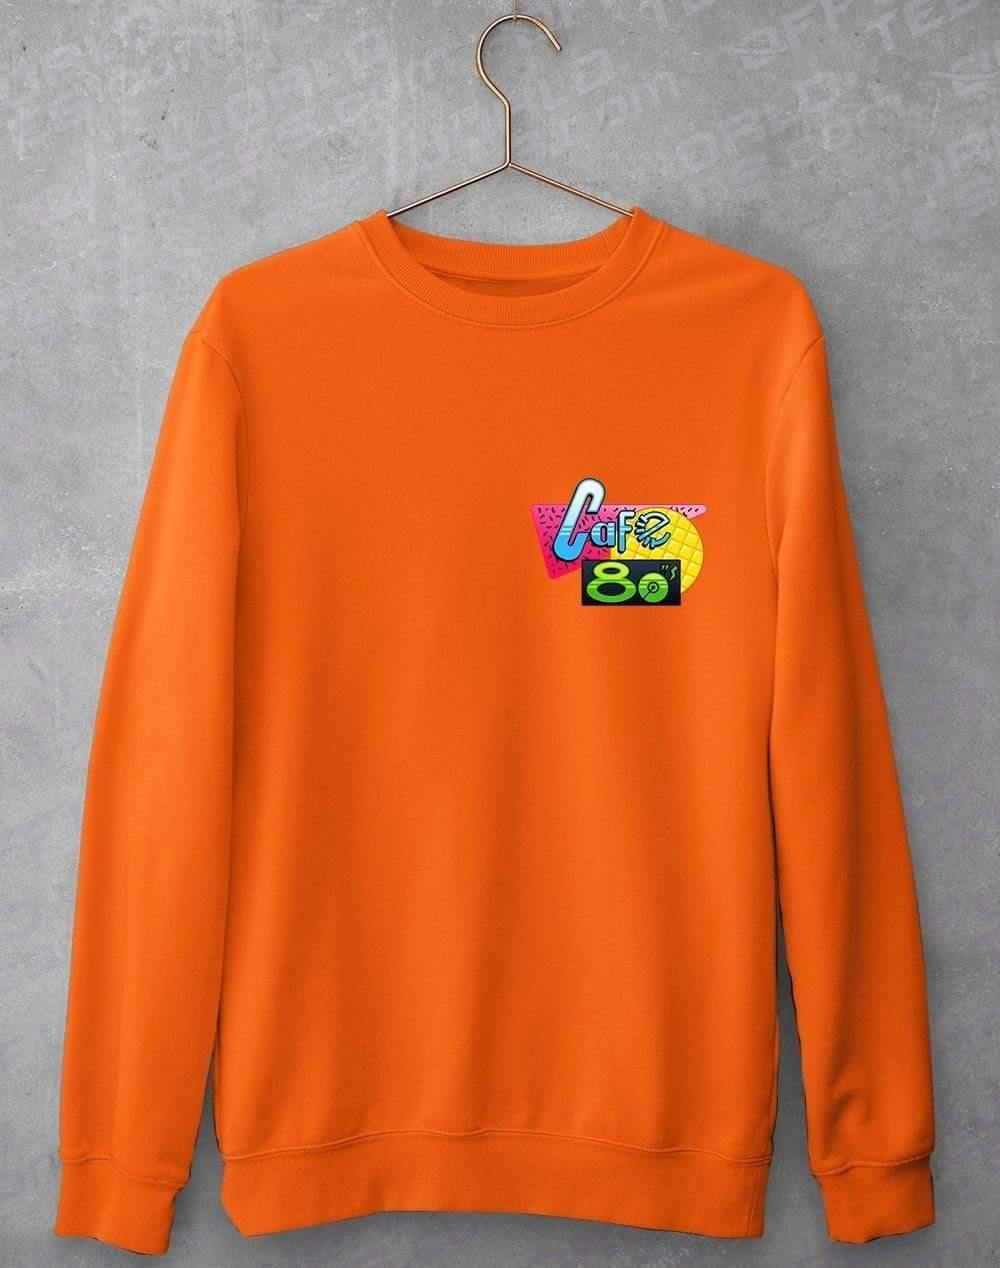 Cafe 80s Pocket Print Sweatshirt S / Orange Crush  - Off World Tees